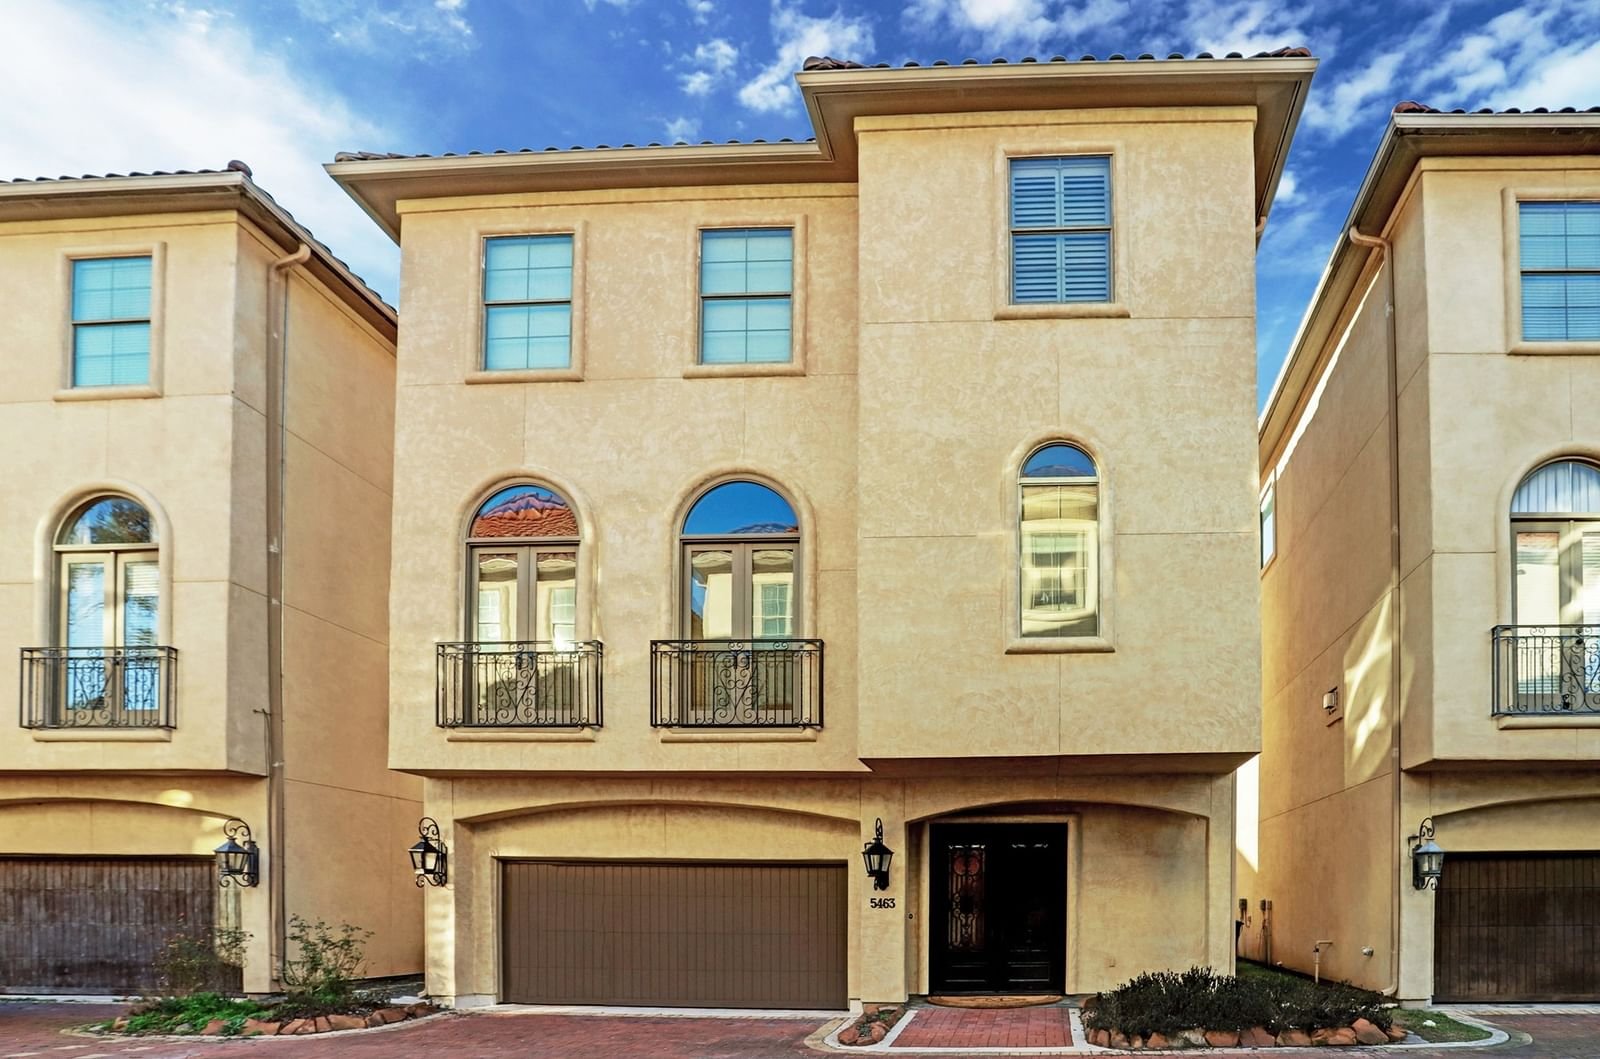 Real estate property located at 5463 John Dreaper, Harris, Durrett Place Villas, Houston, TX, US